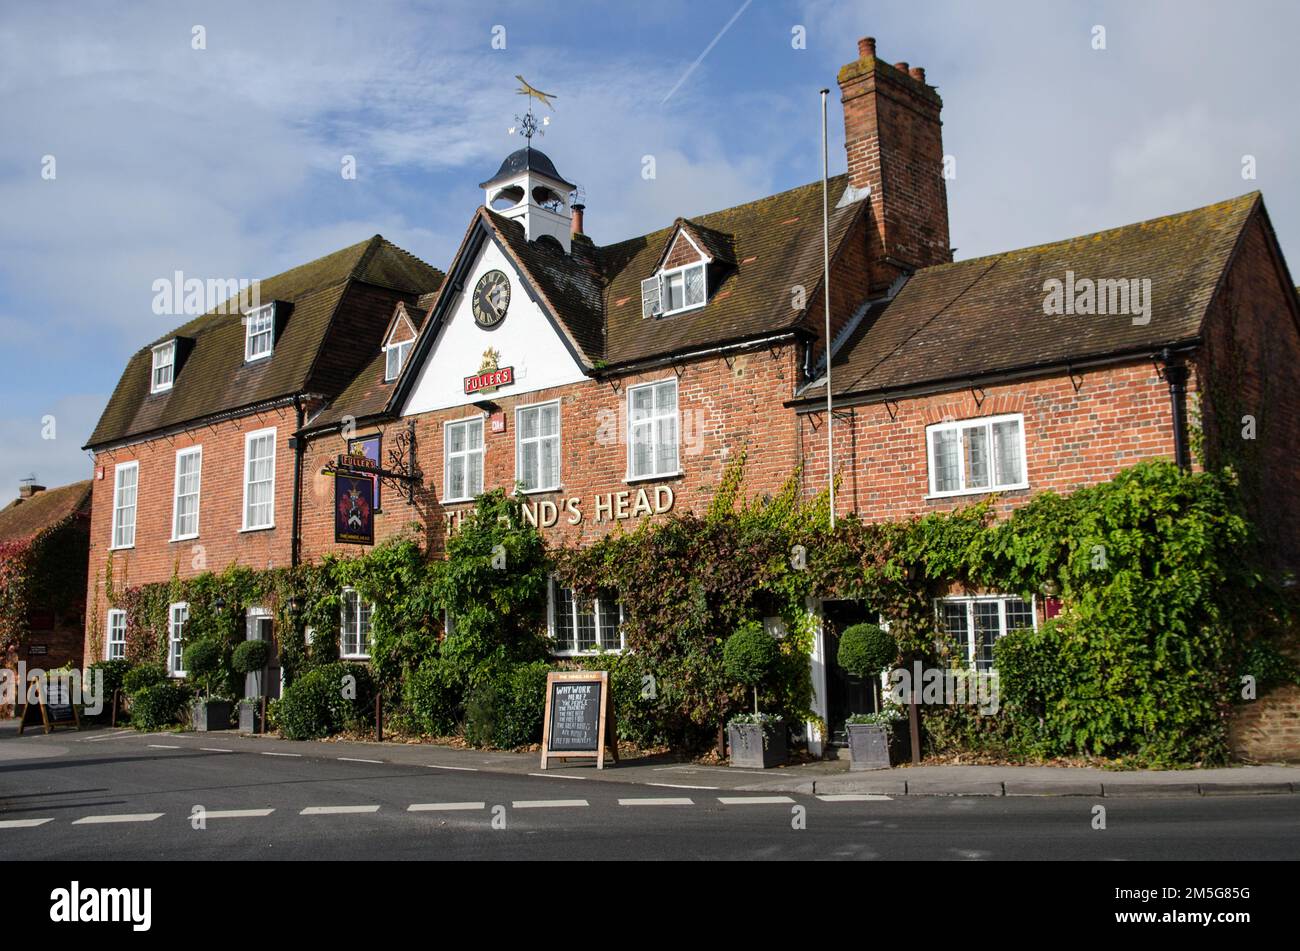 Aldermaston, UK - October 27, 2021: Sunny view of the historic Hind's Head pub in the village of Aldermaston in Berkshire. Stock Photo